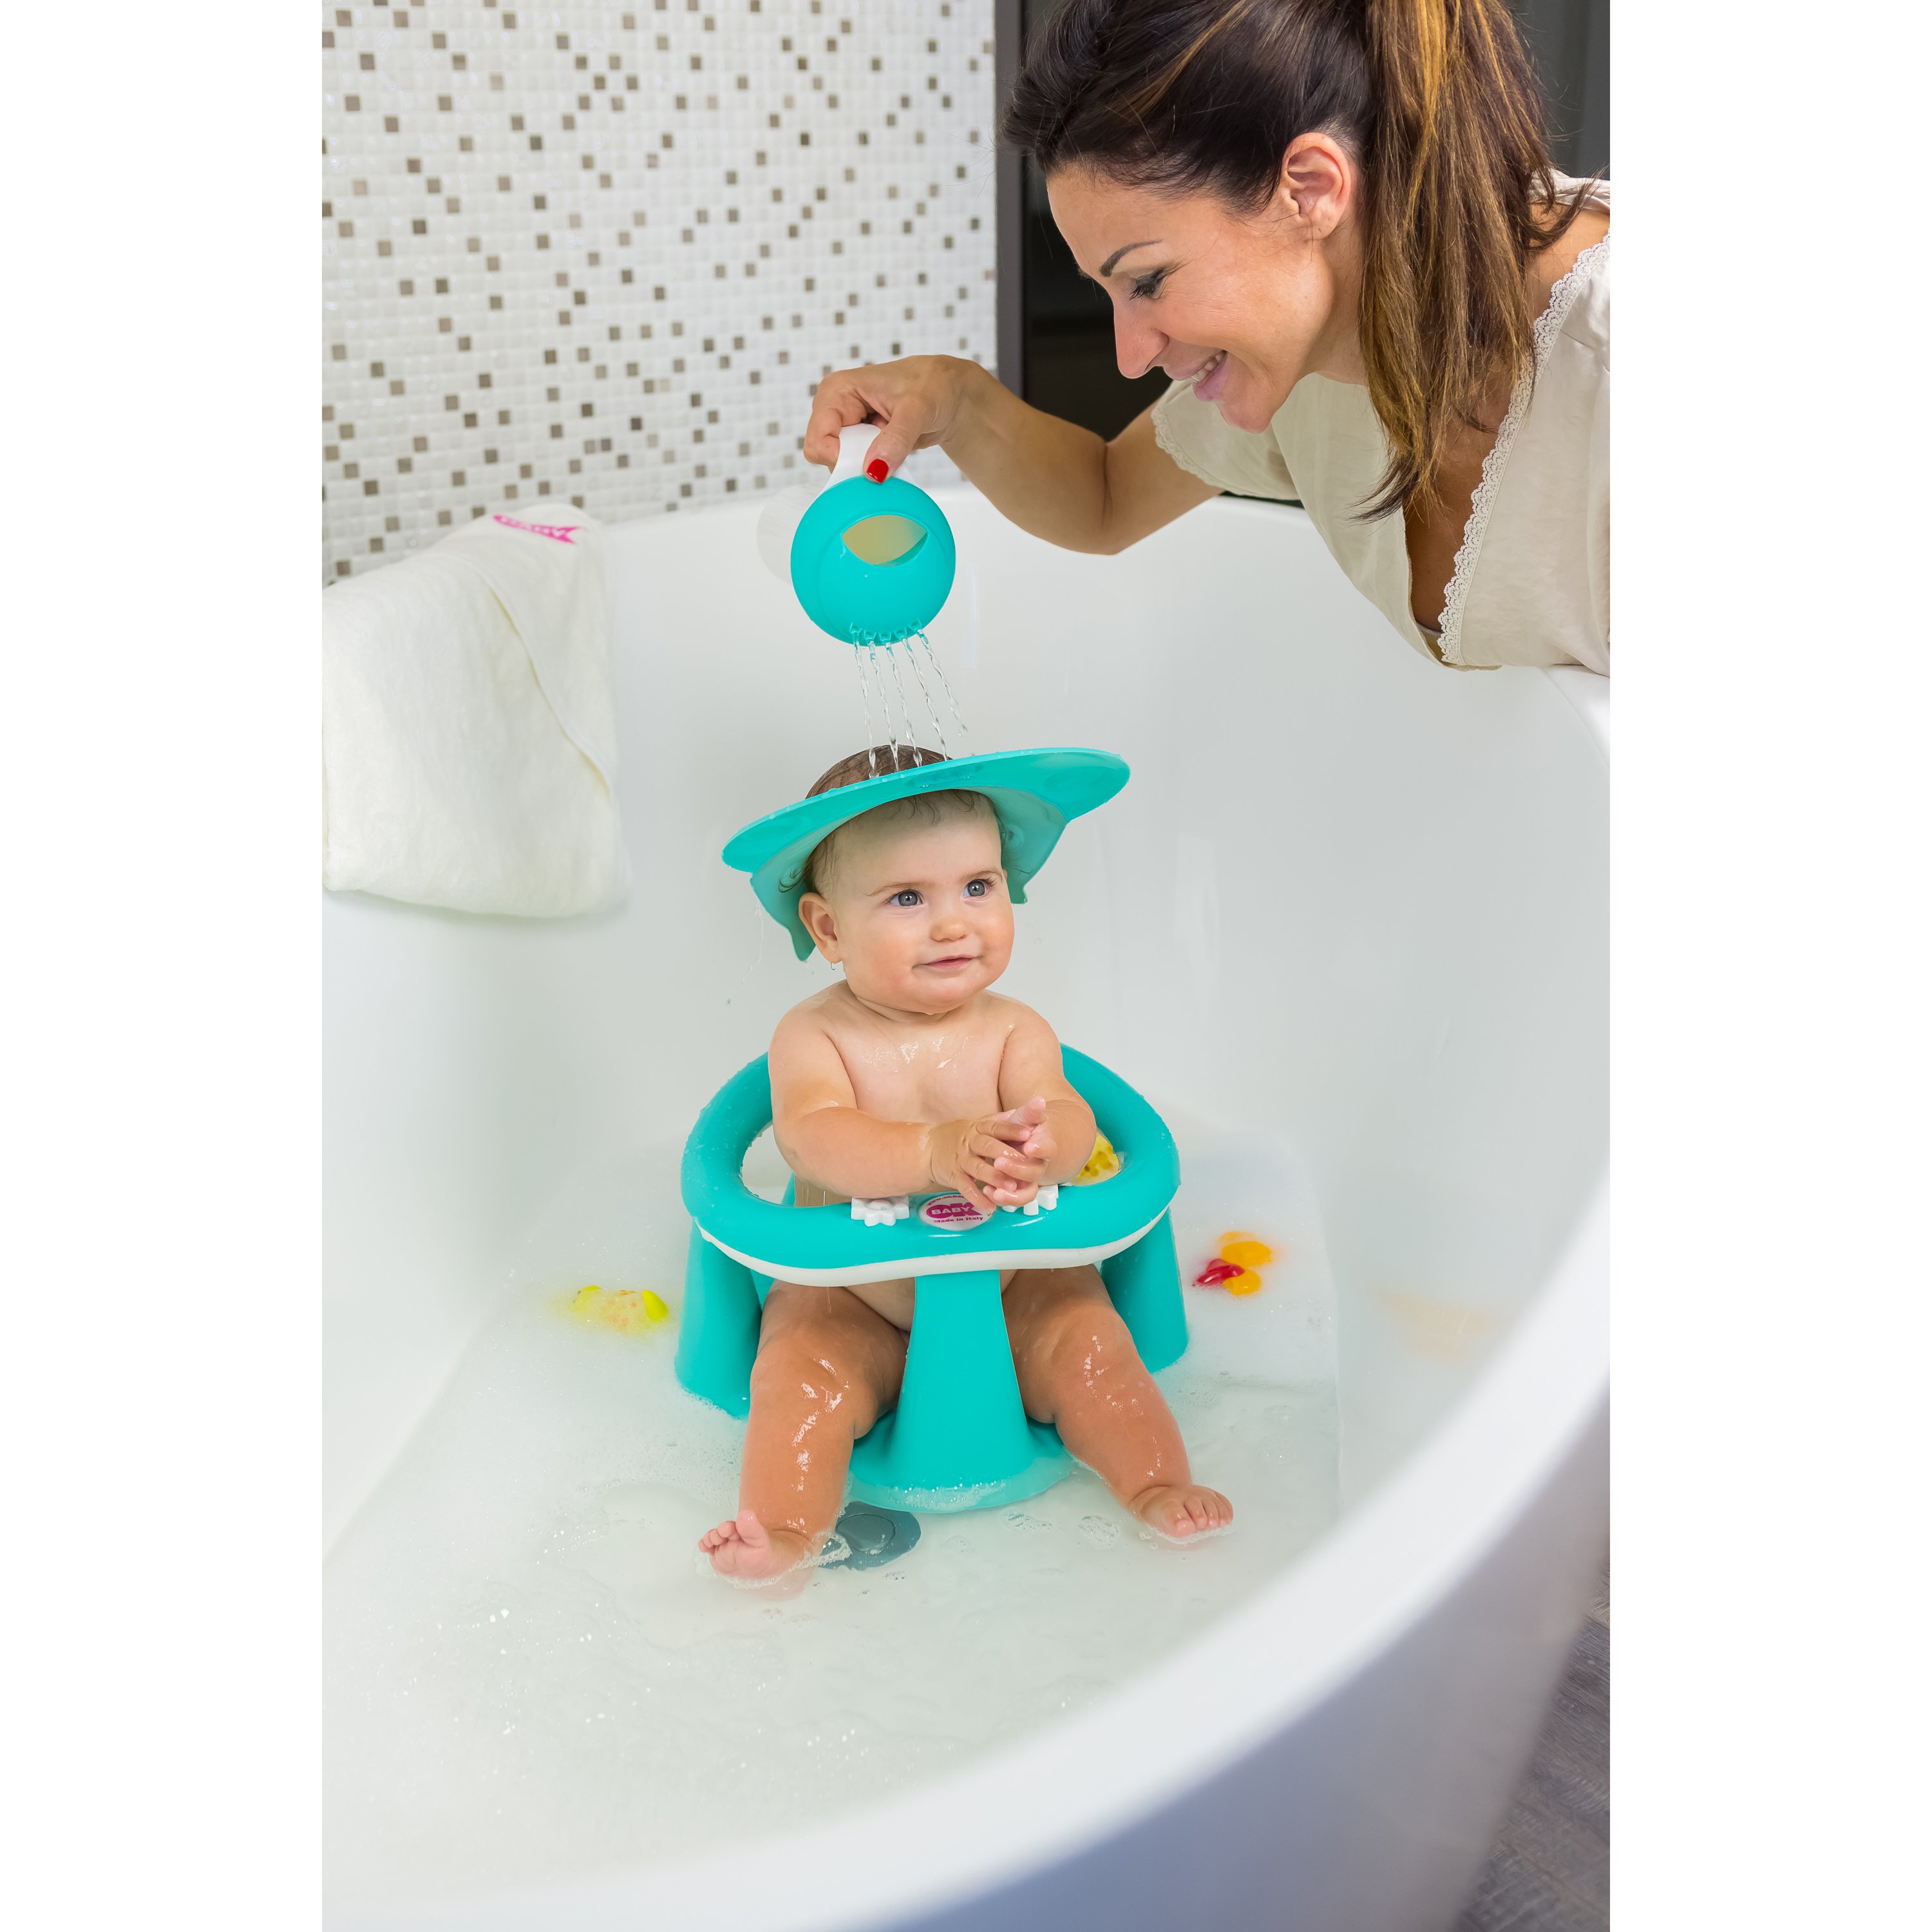 Flipper Evolution siège de bain Blanc de OK Baby, Fauteuils de bain : Aubert